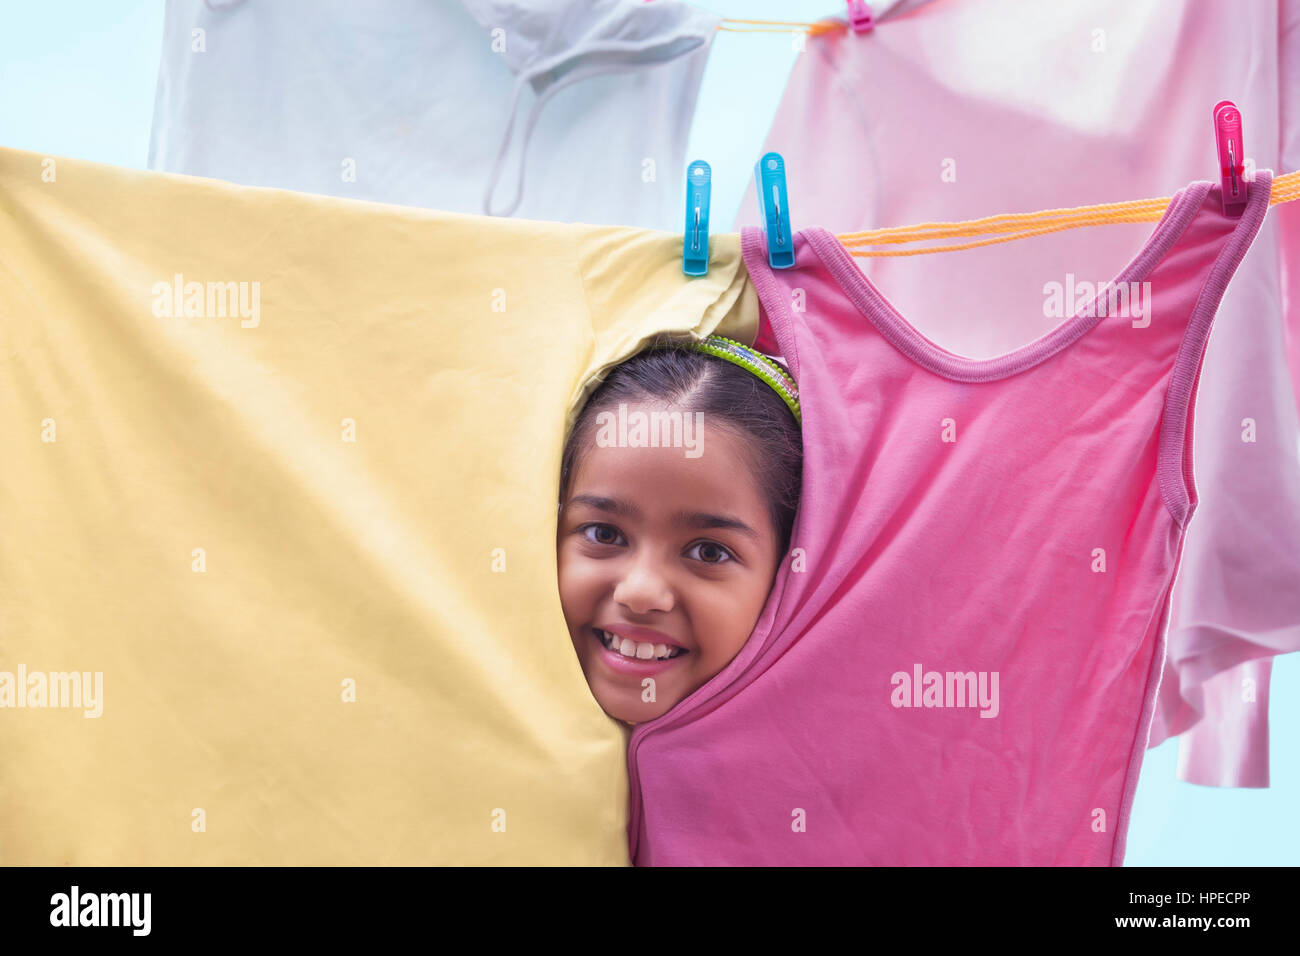 Young girl peeking through cloths on a clothesline Stock Photo